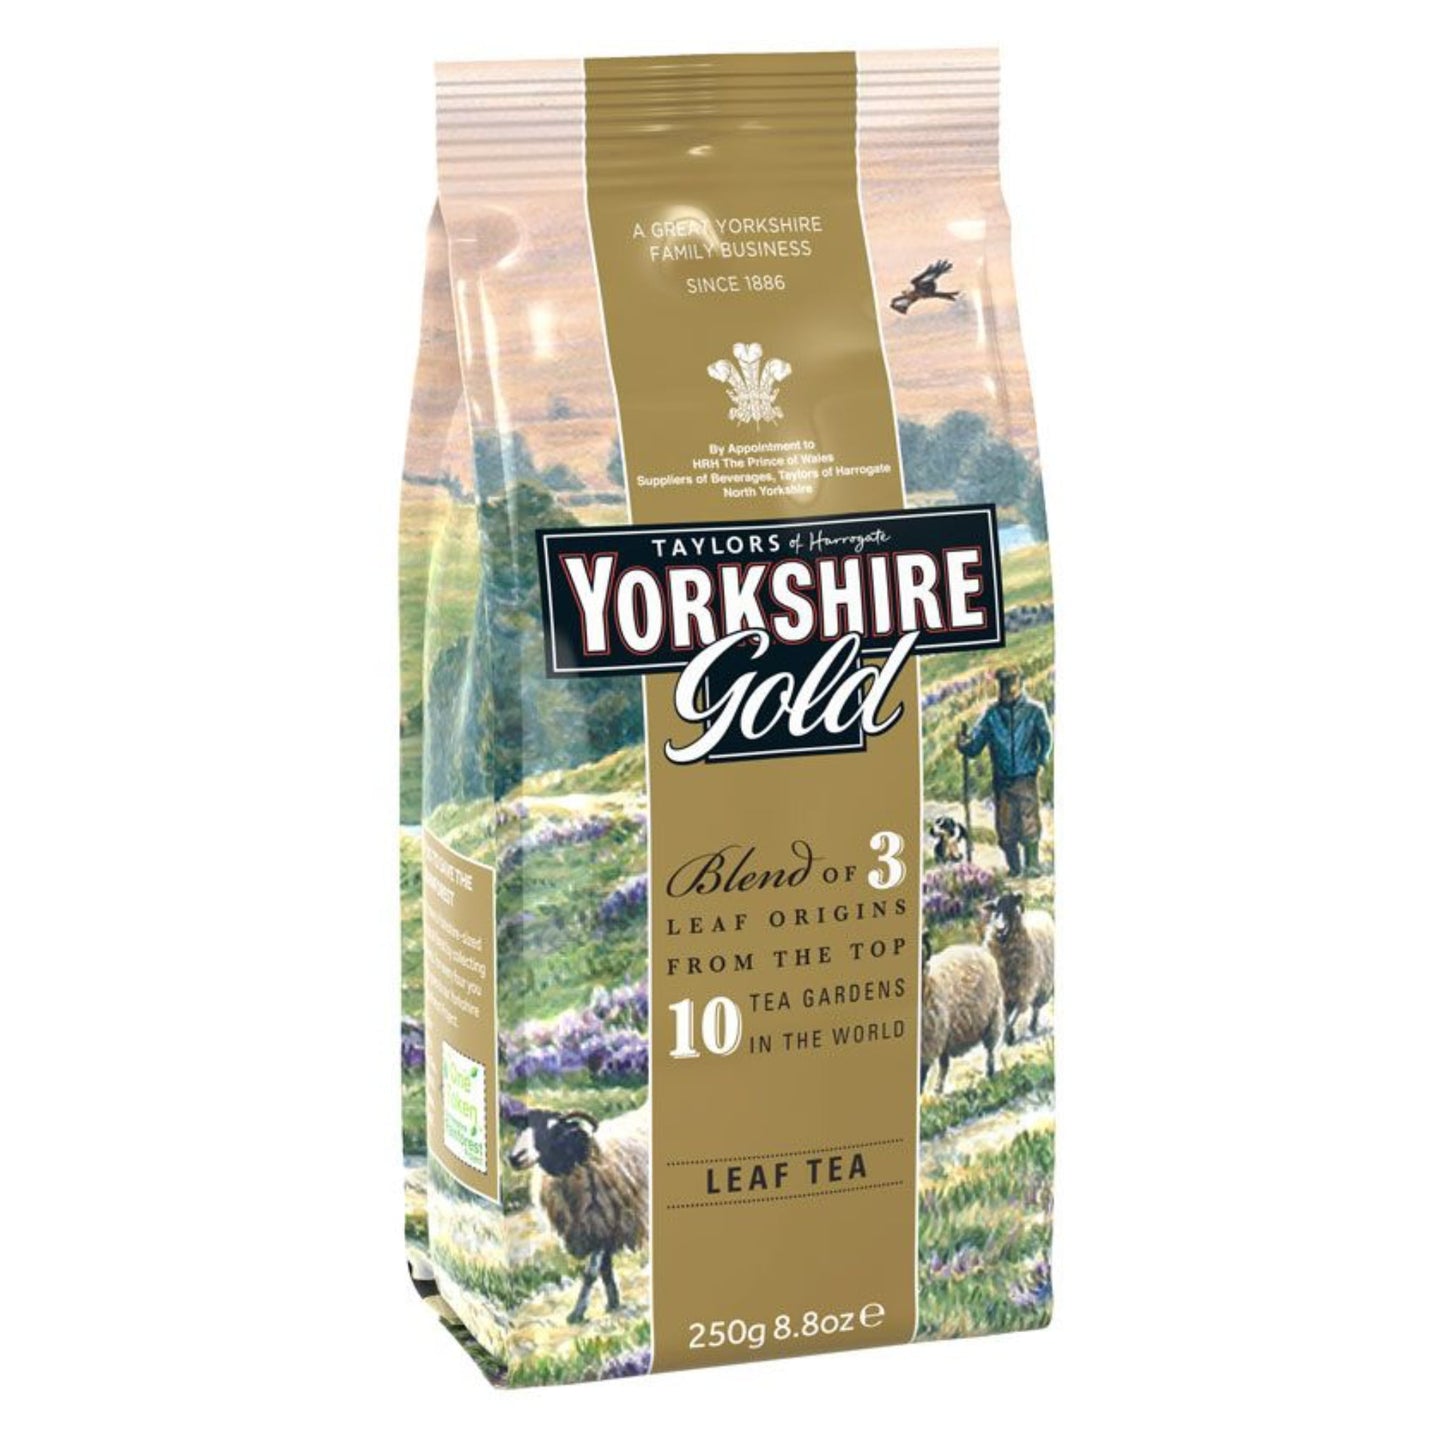 Yorkshire Tea Gold Loose Leaf - The Great Yorkshire Shop